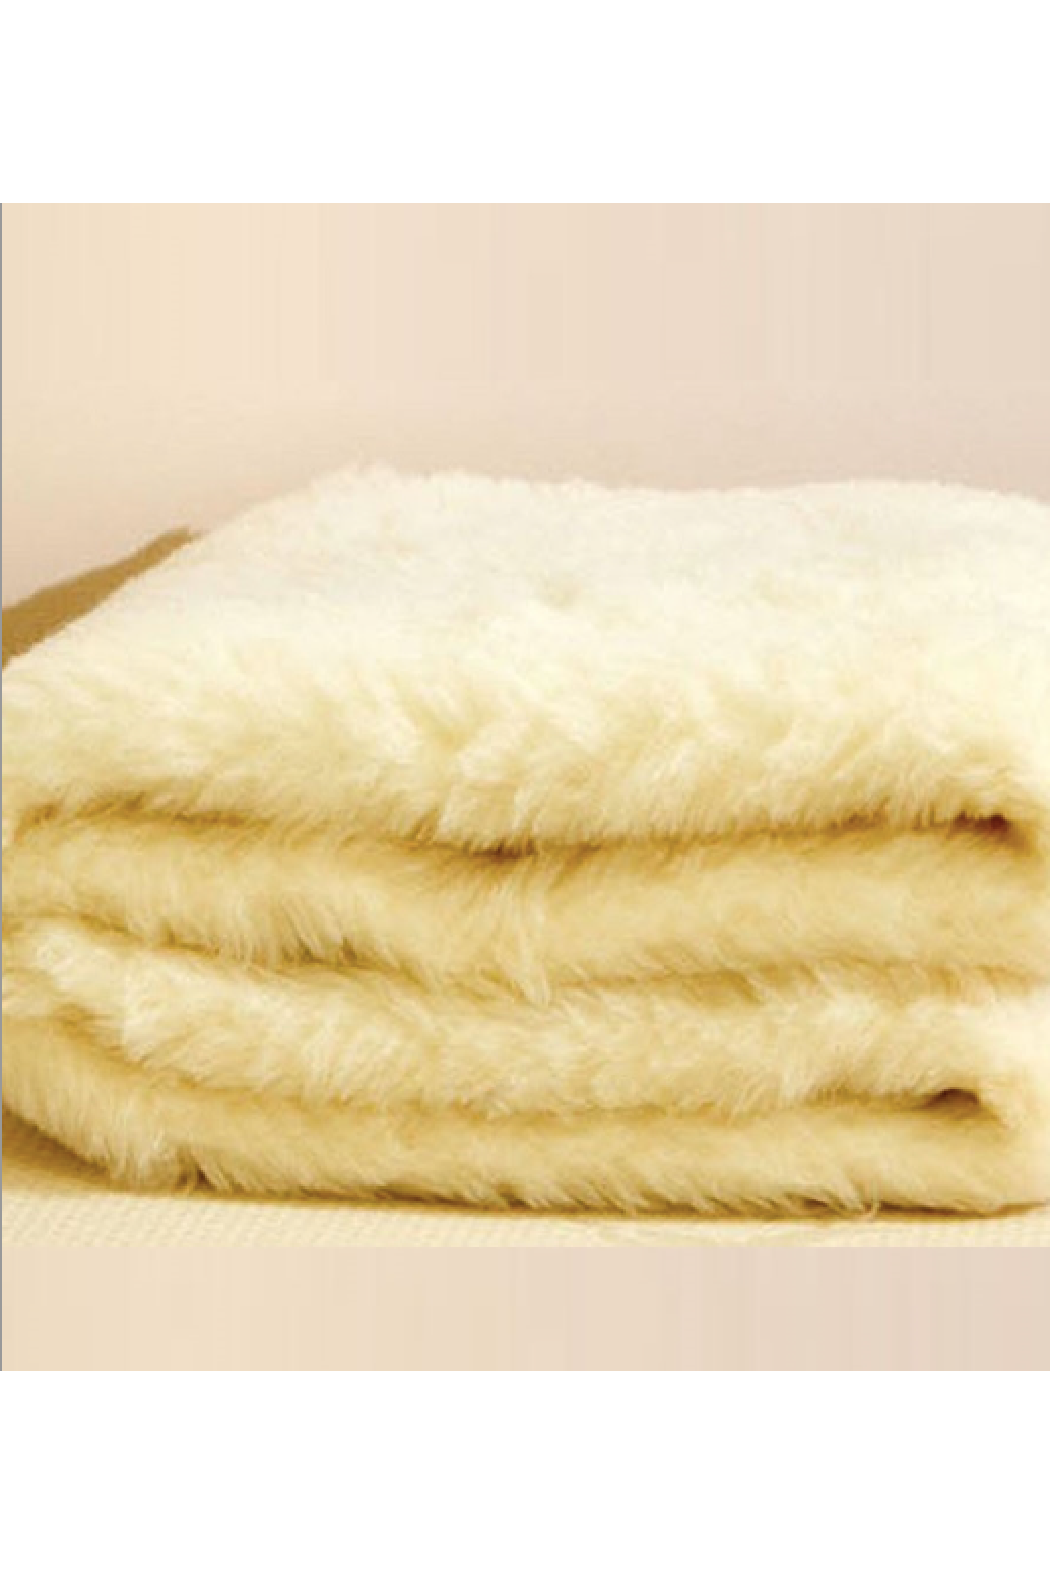 Wool Mattress Overlay